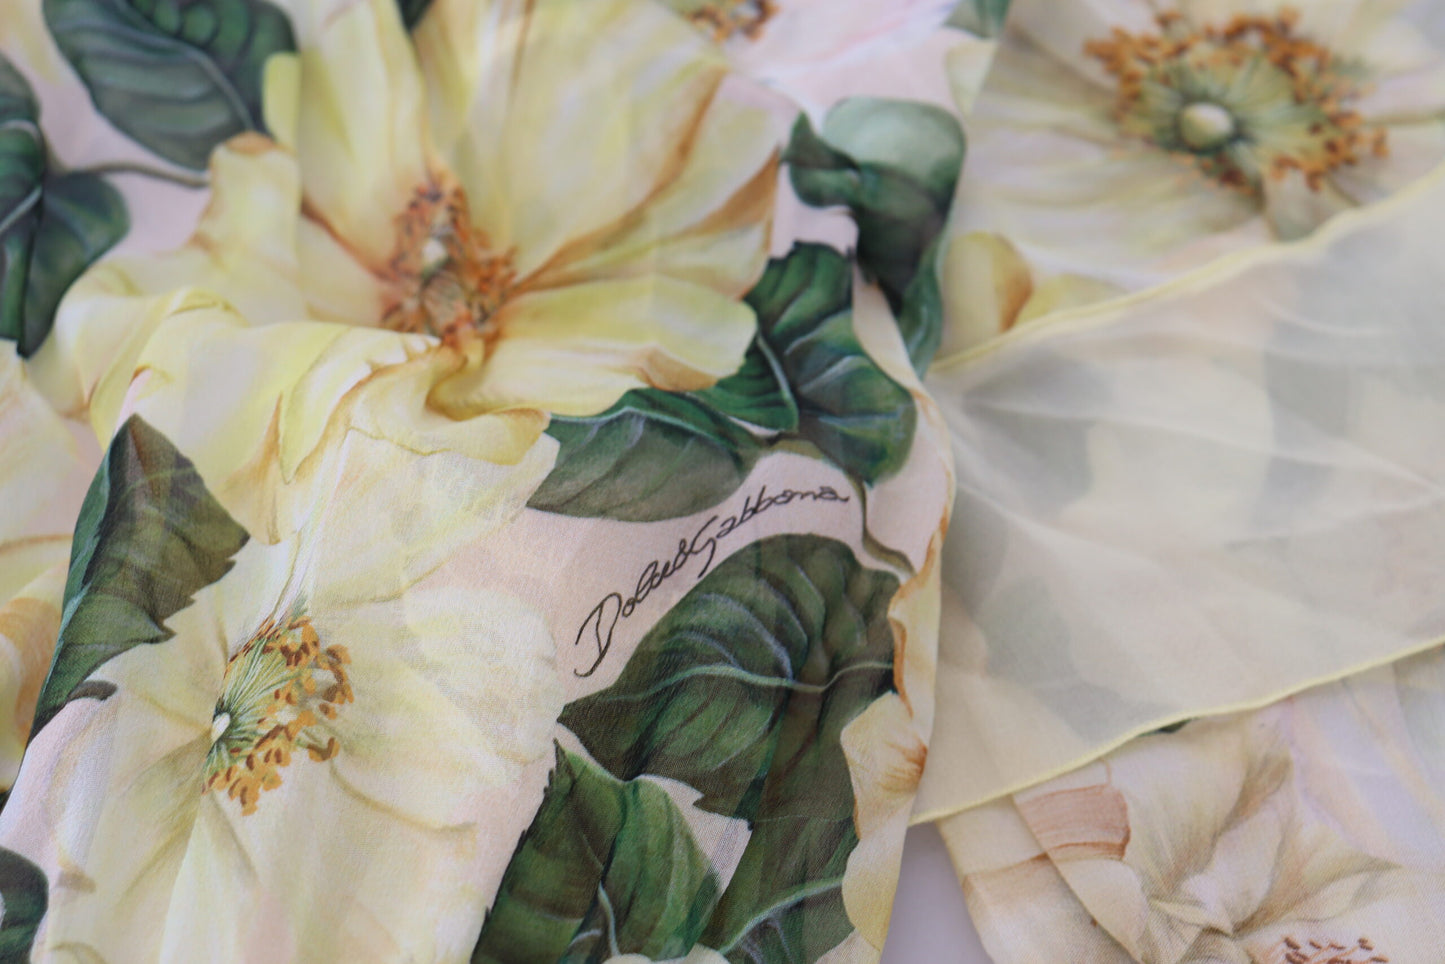 Dolce & Gabbana Multicolor Silk Floral Stampa Maxi Dress